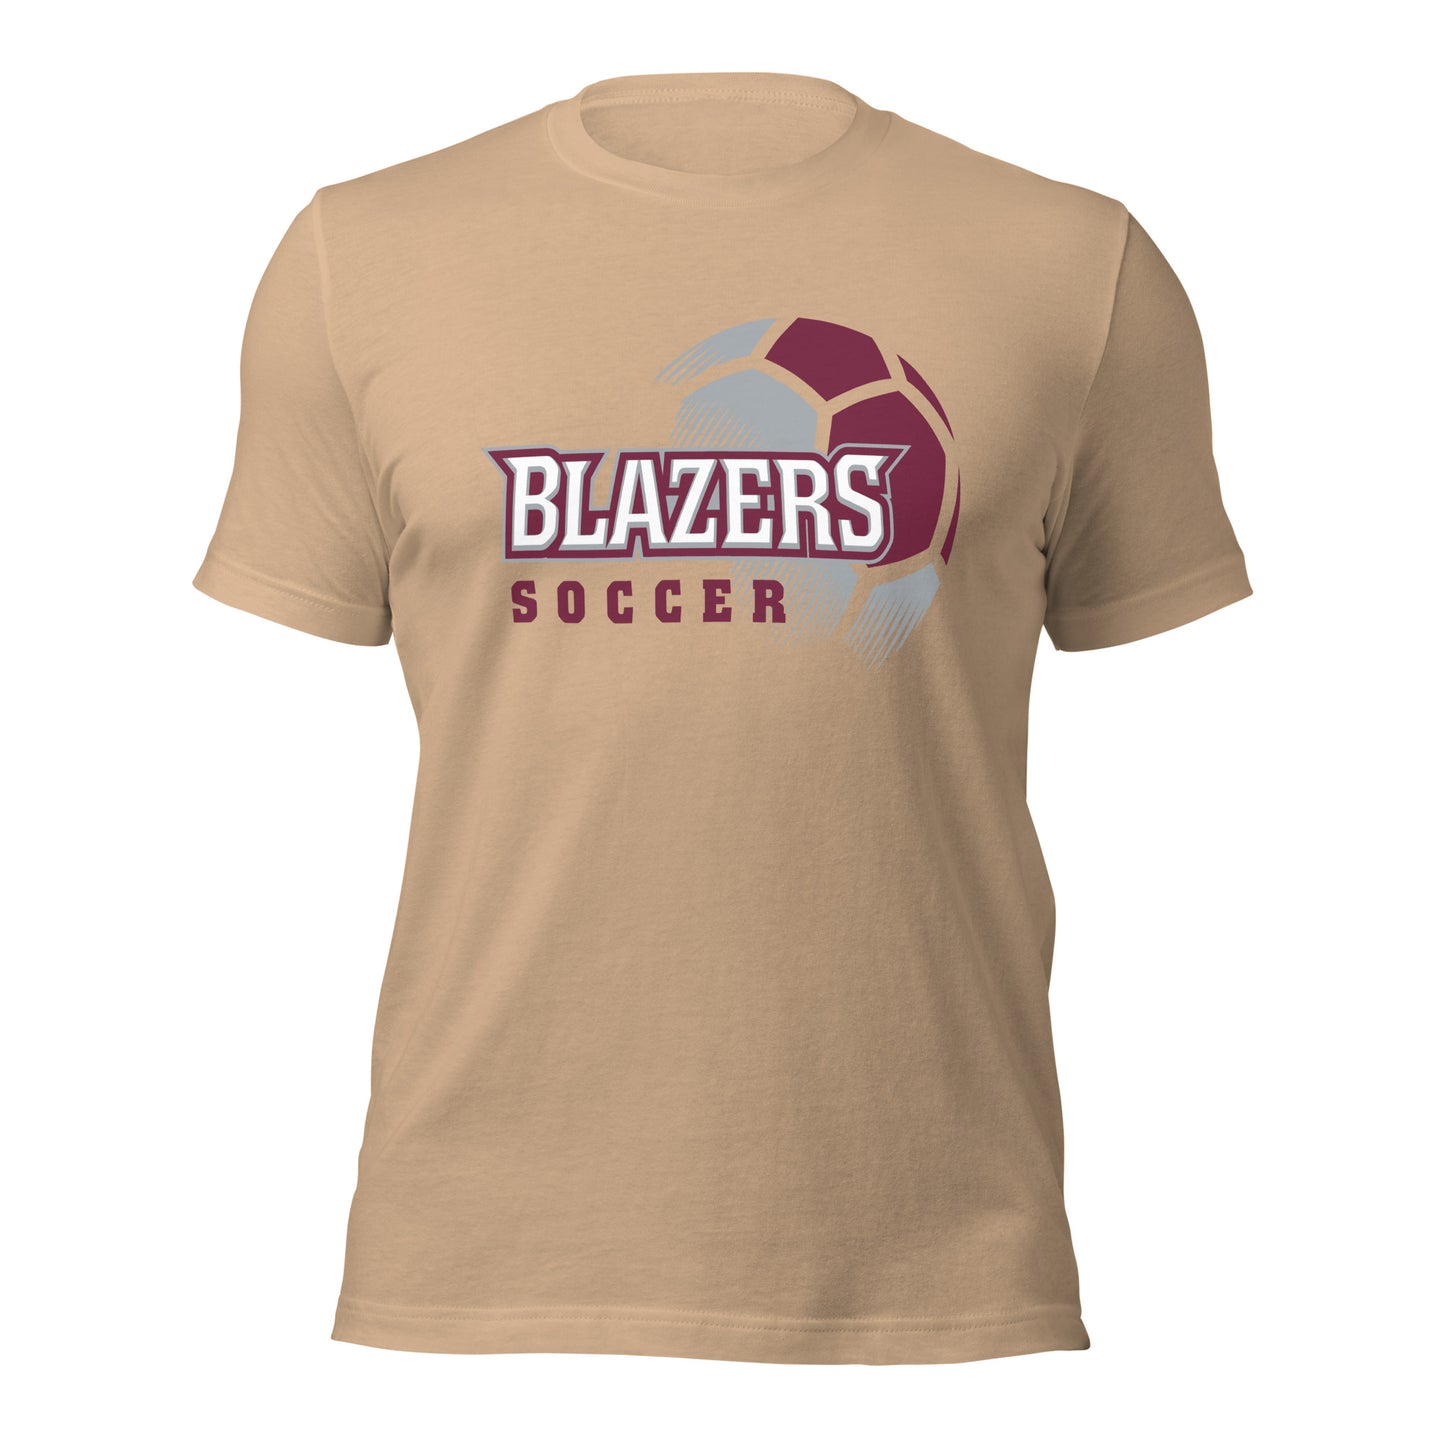 Blazers Soccer Unisex Short-Sleeve T-Shirt Light Colors Second Design